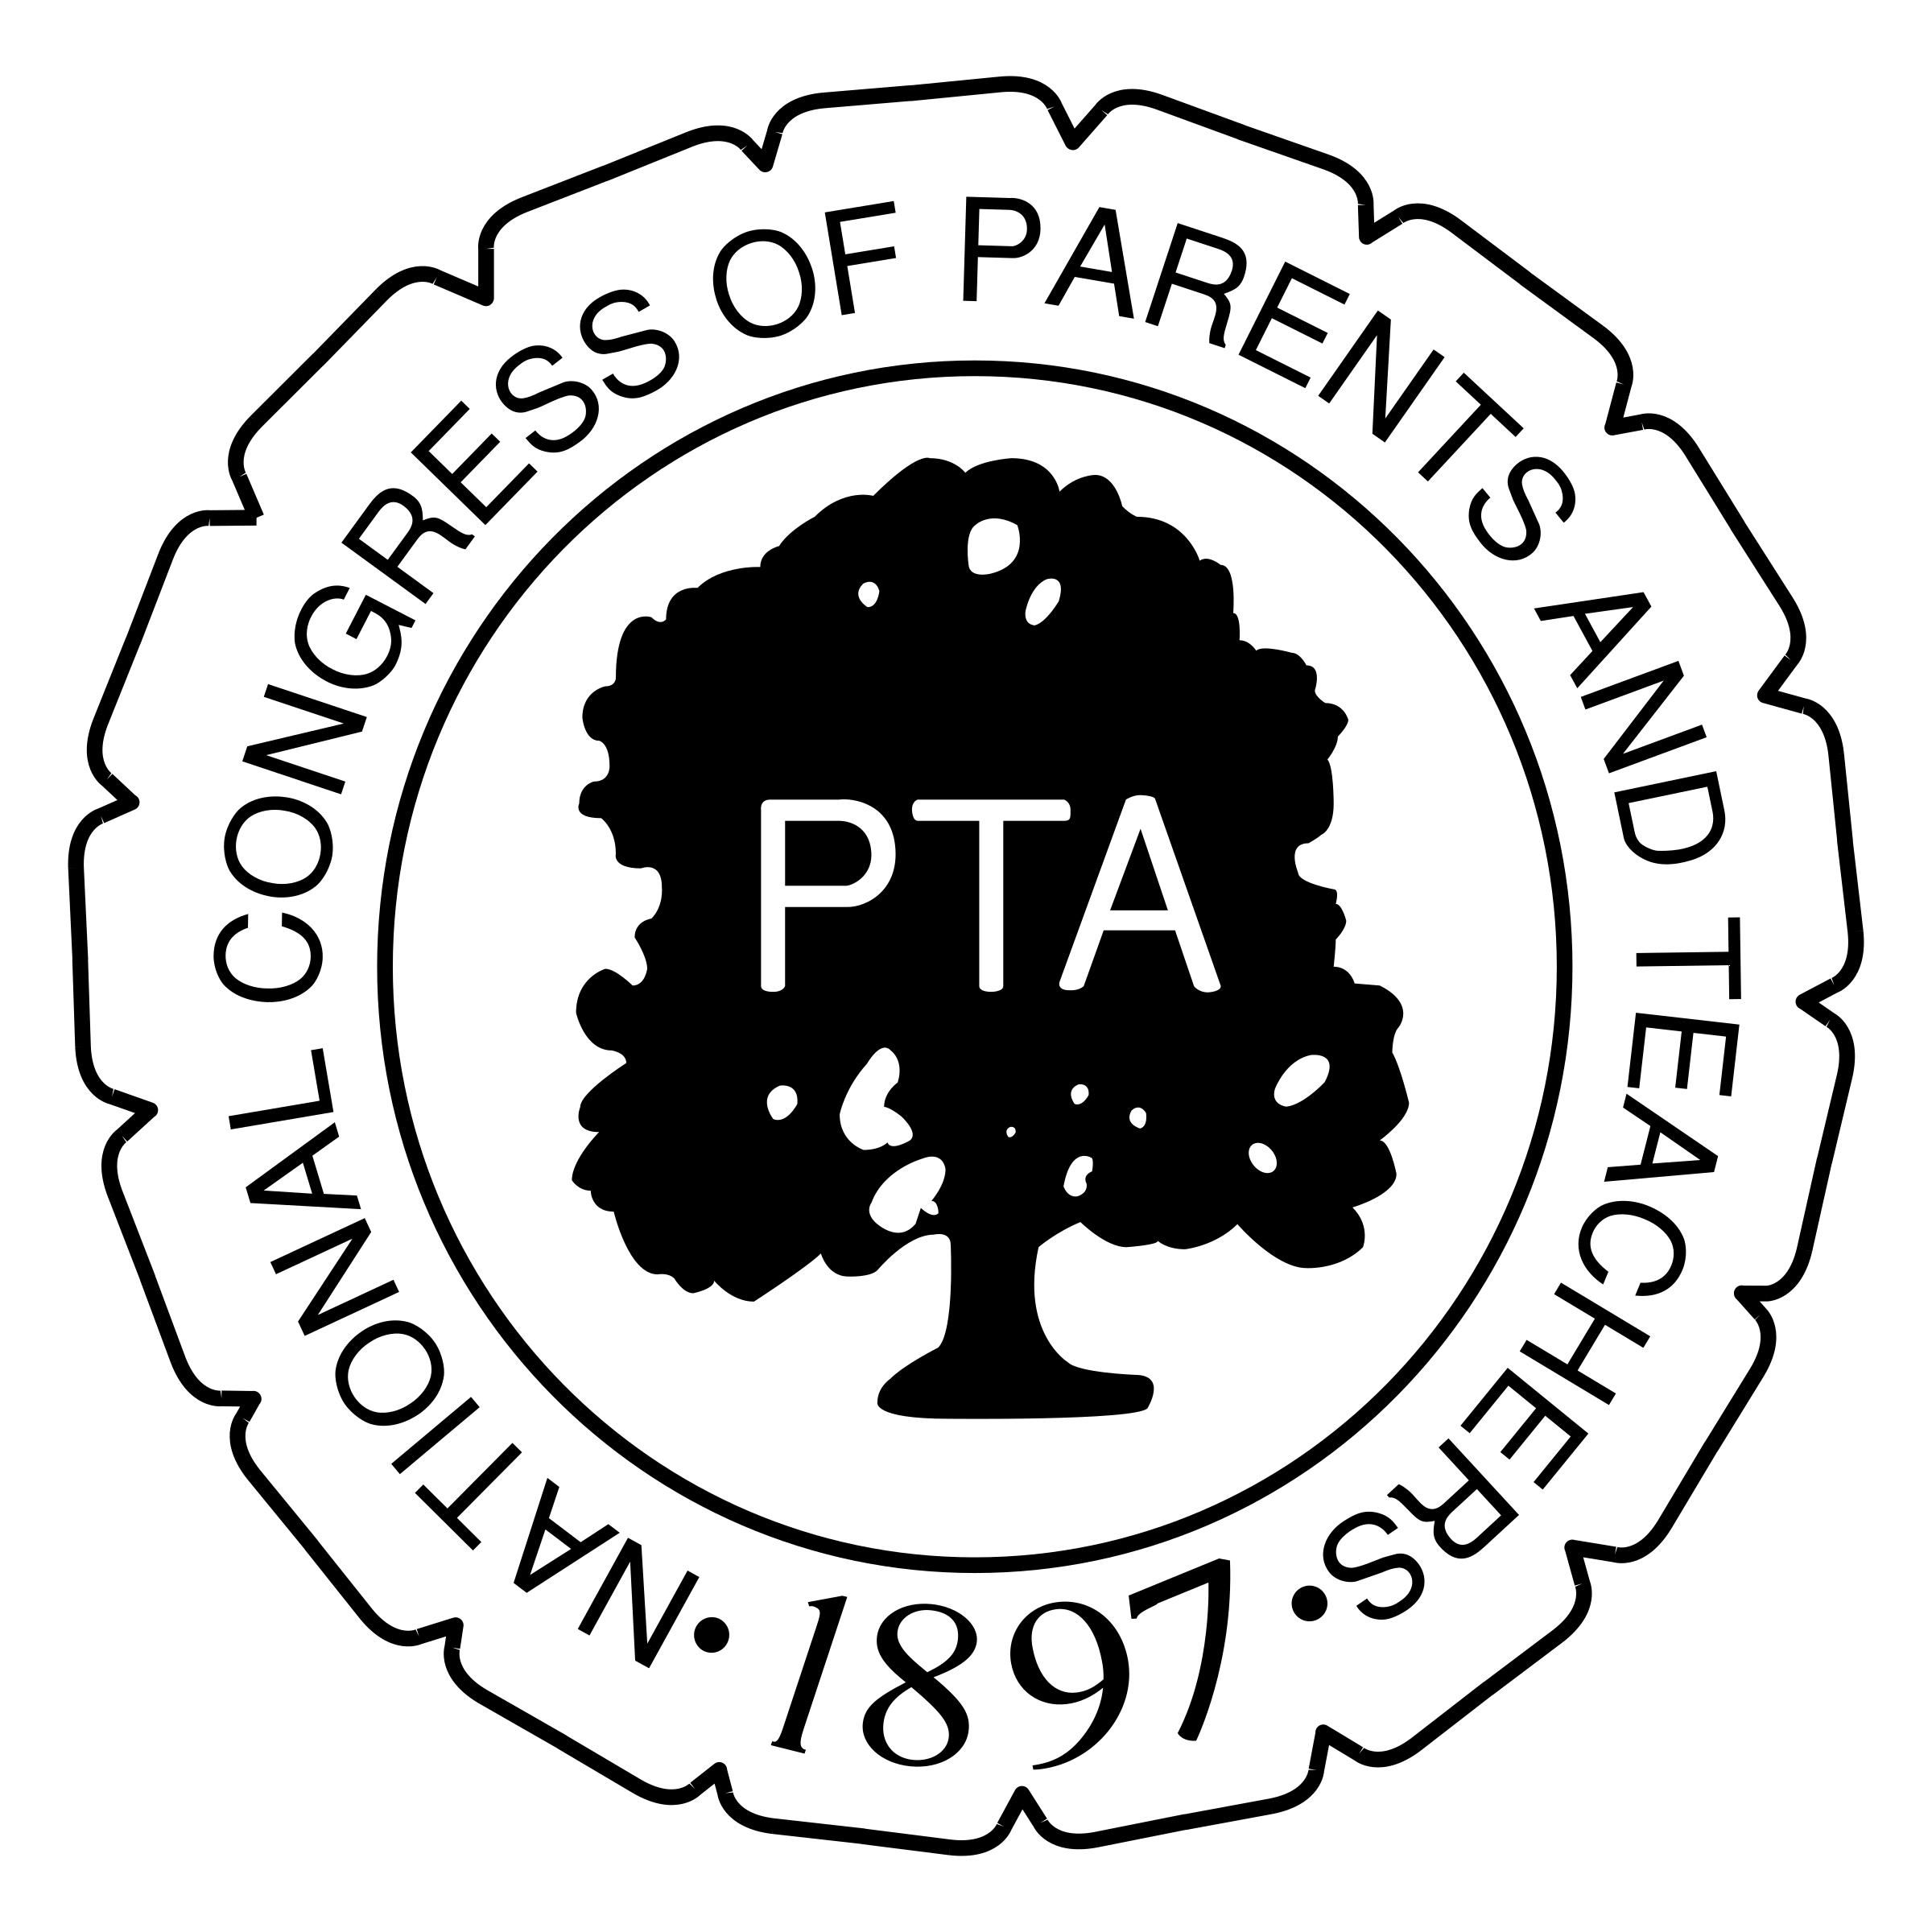 PTA Logo - PTA Logo PNG Transparent & SVG Vector - Freebie Supply